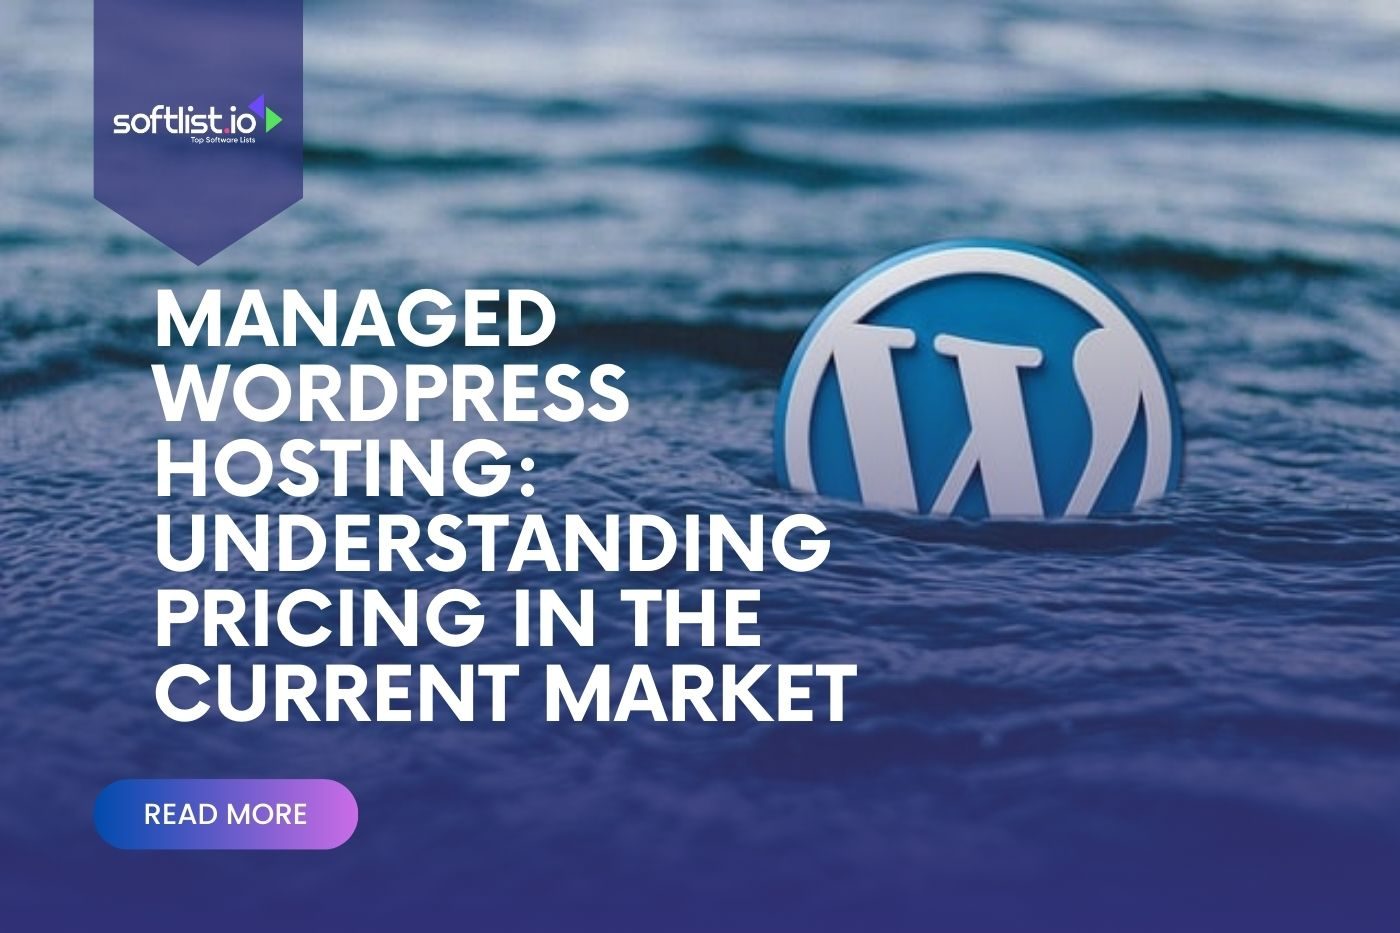 Managed WordPress Hosting Understanding Pricing in the Current Market